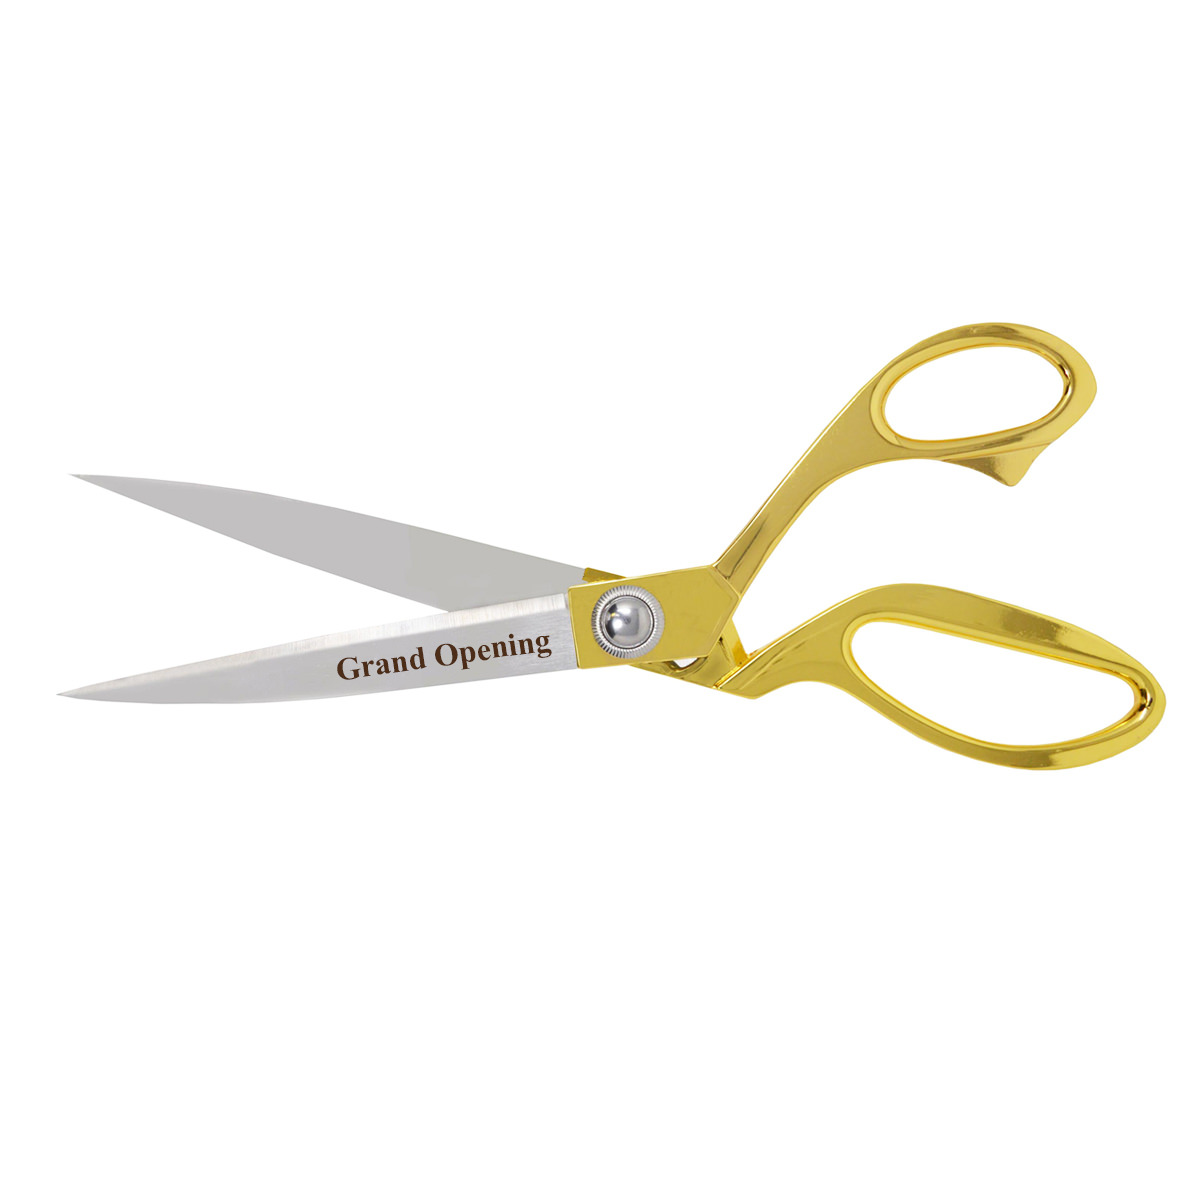 https://www.ceremonialsupplies.com/images/thumbs/0002293_golden-handle-stainless-steel-ceremonial-scissors.jpeg